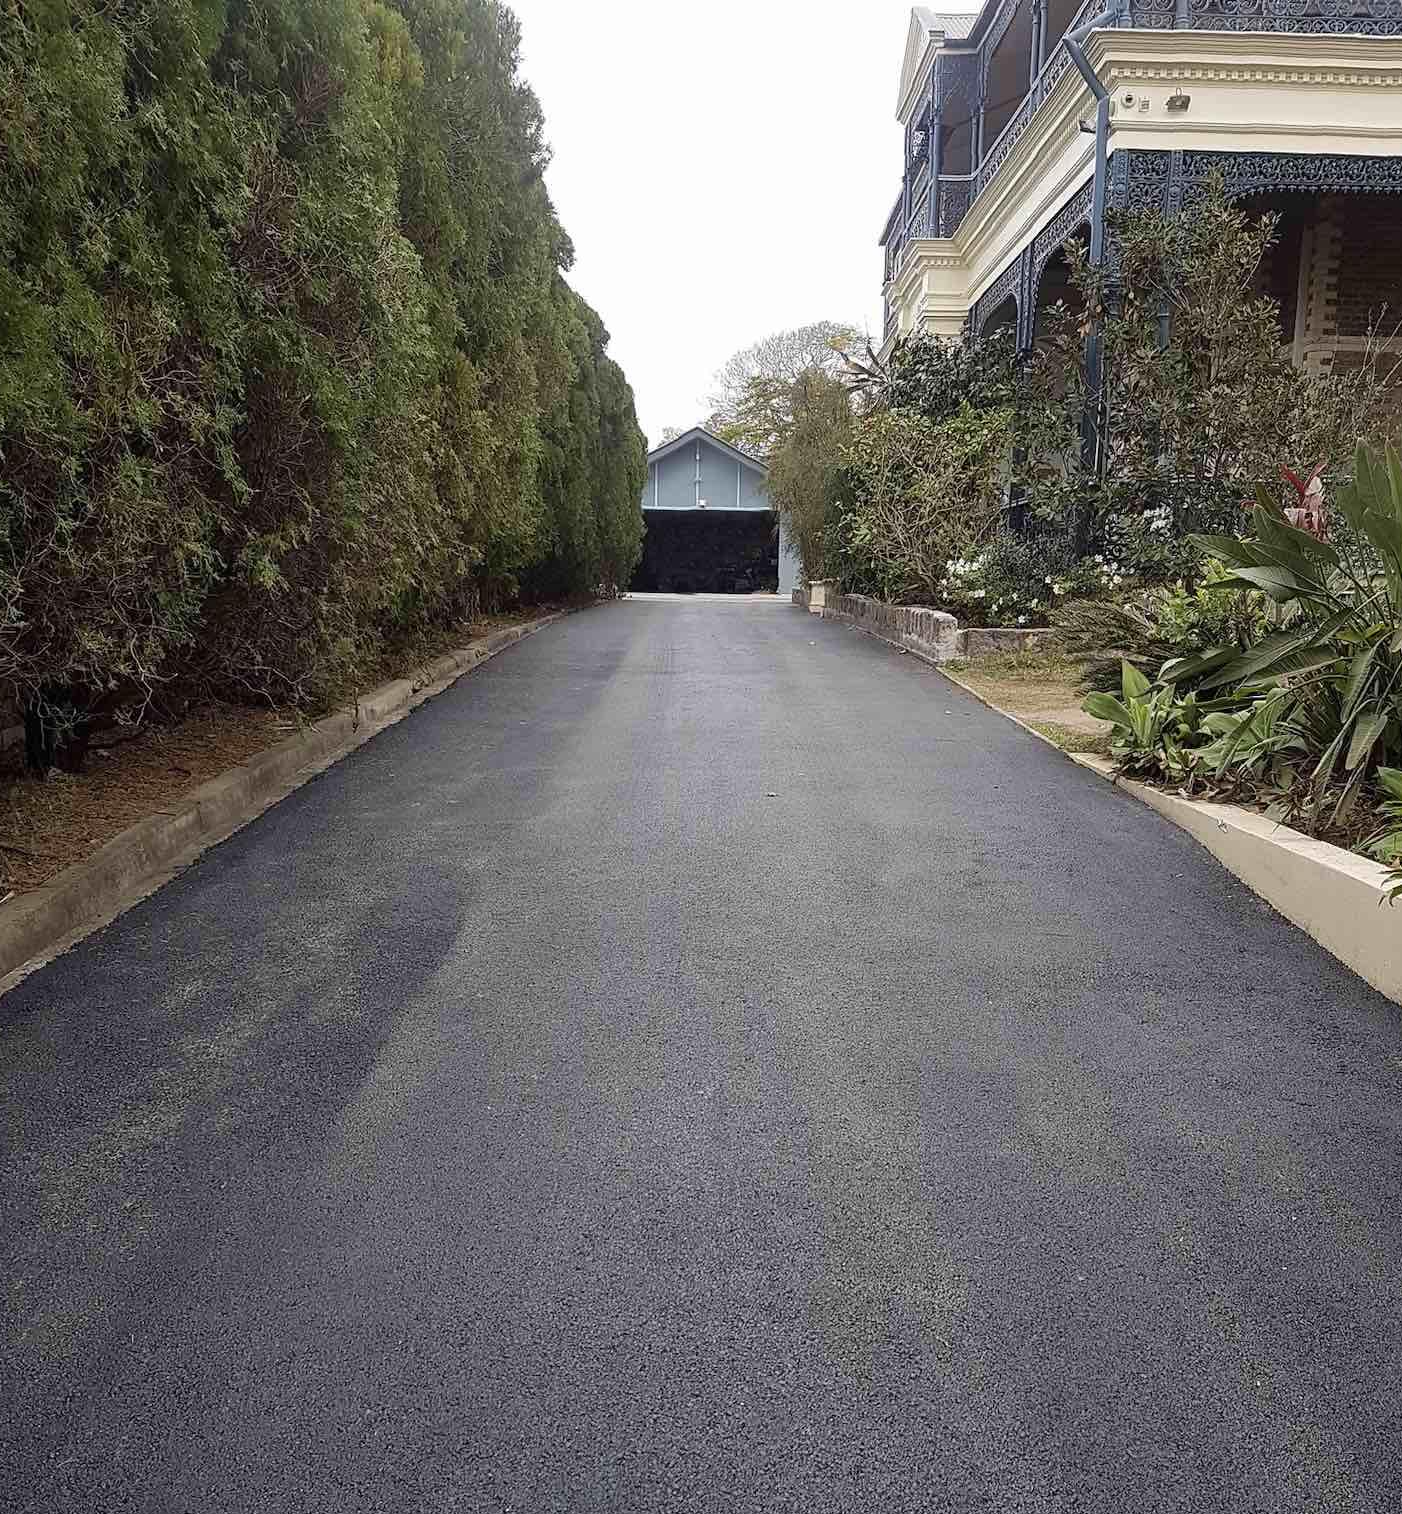 Nyrambla driveway